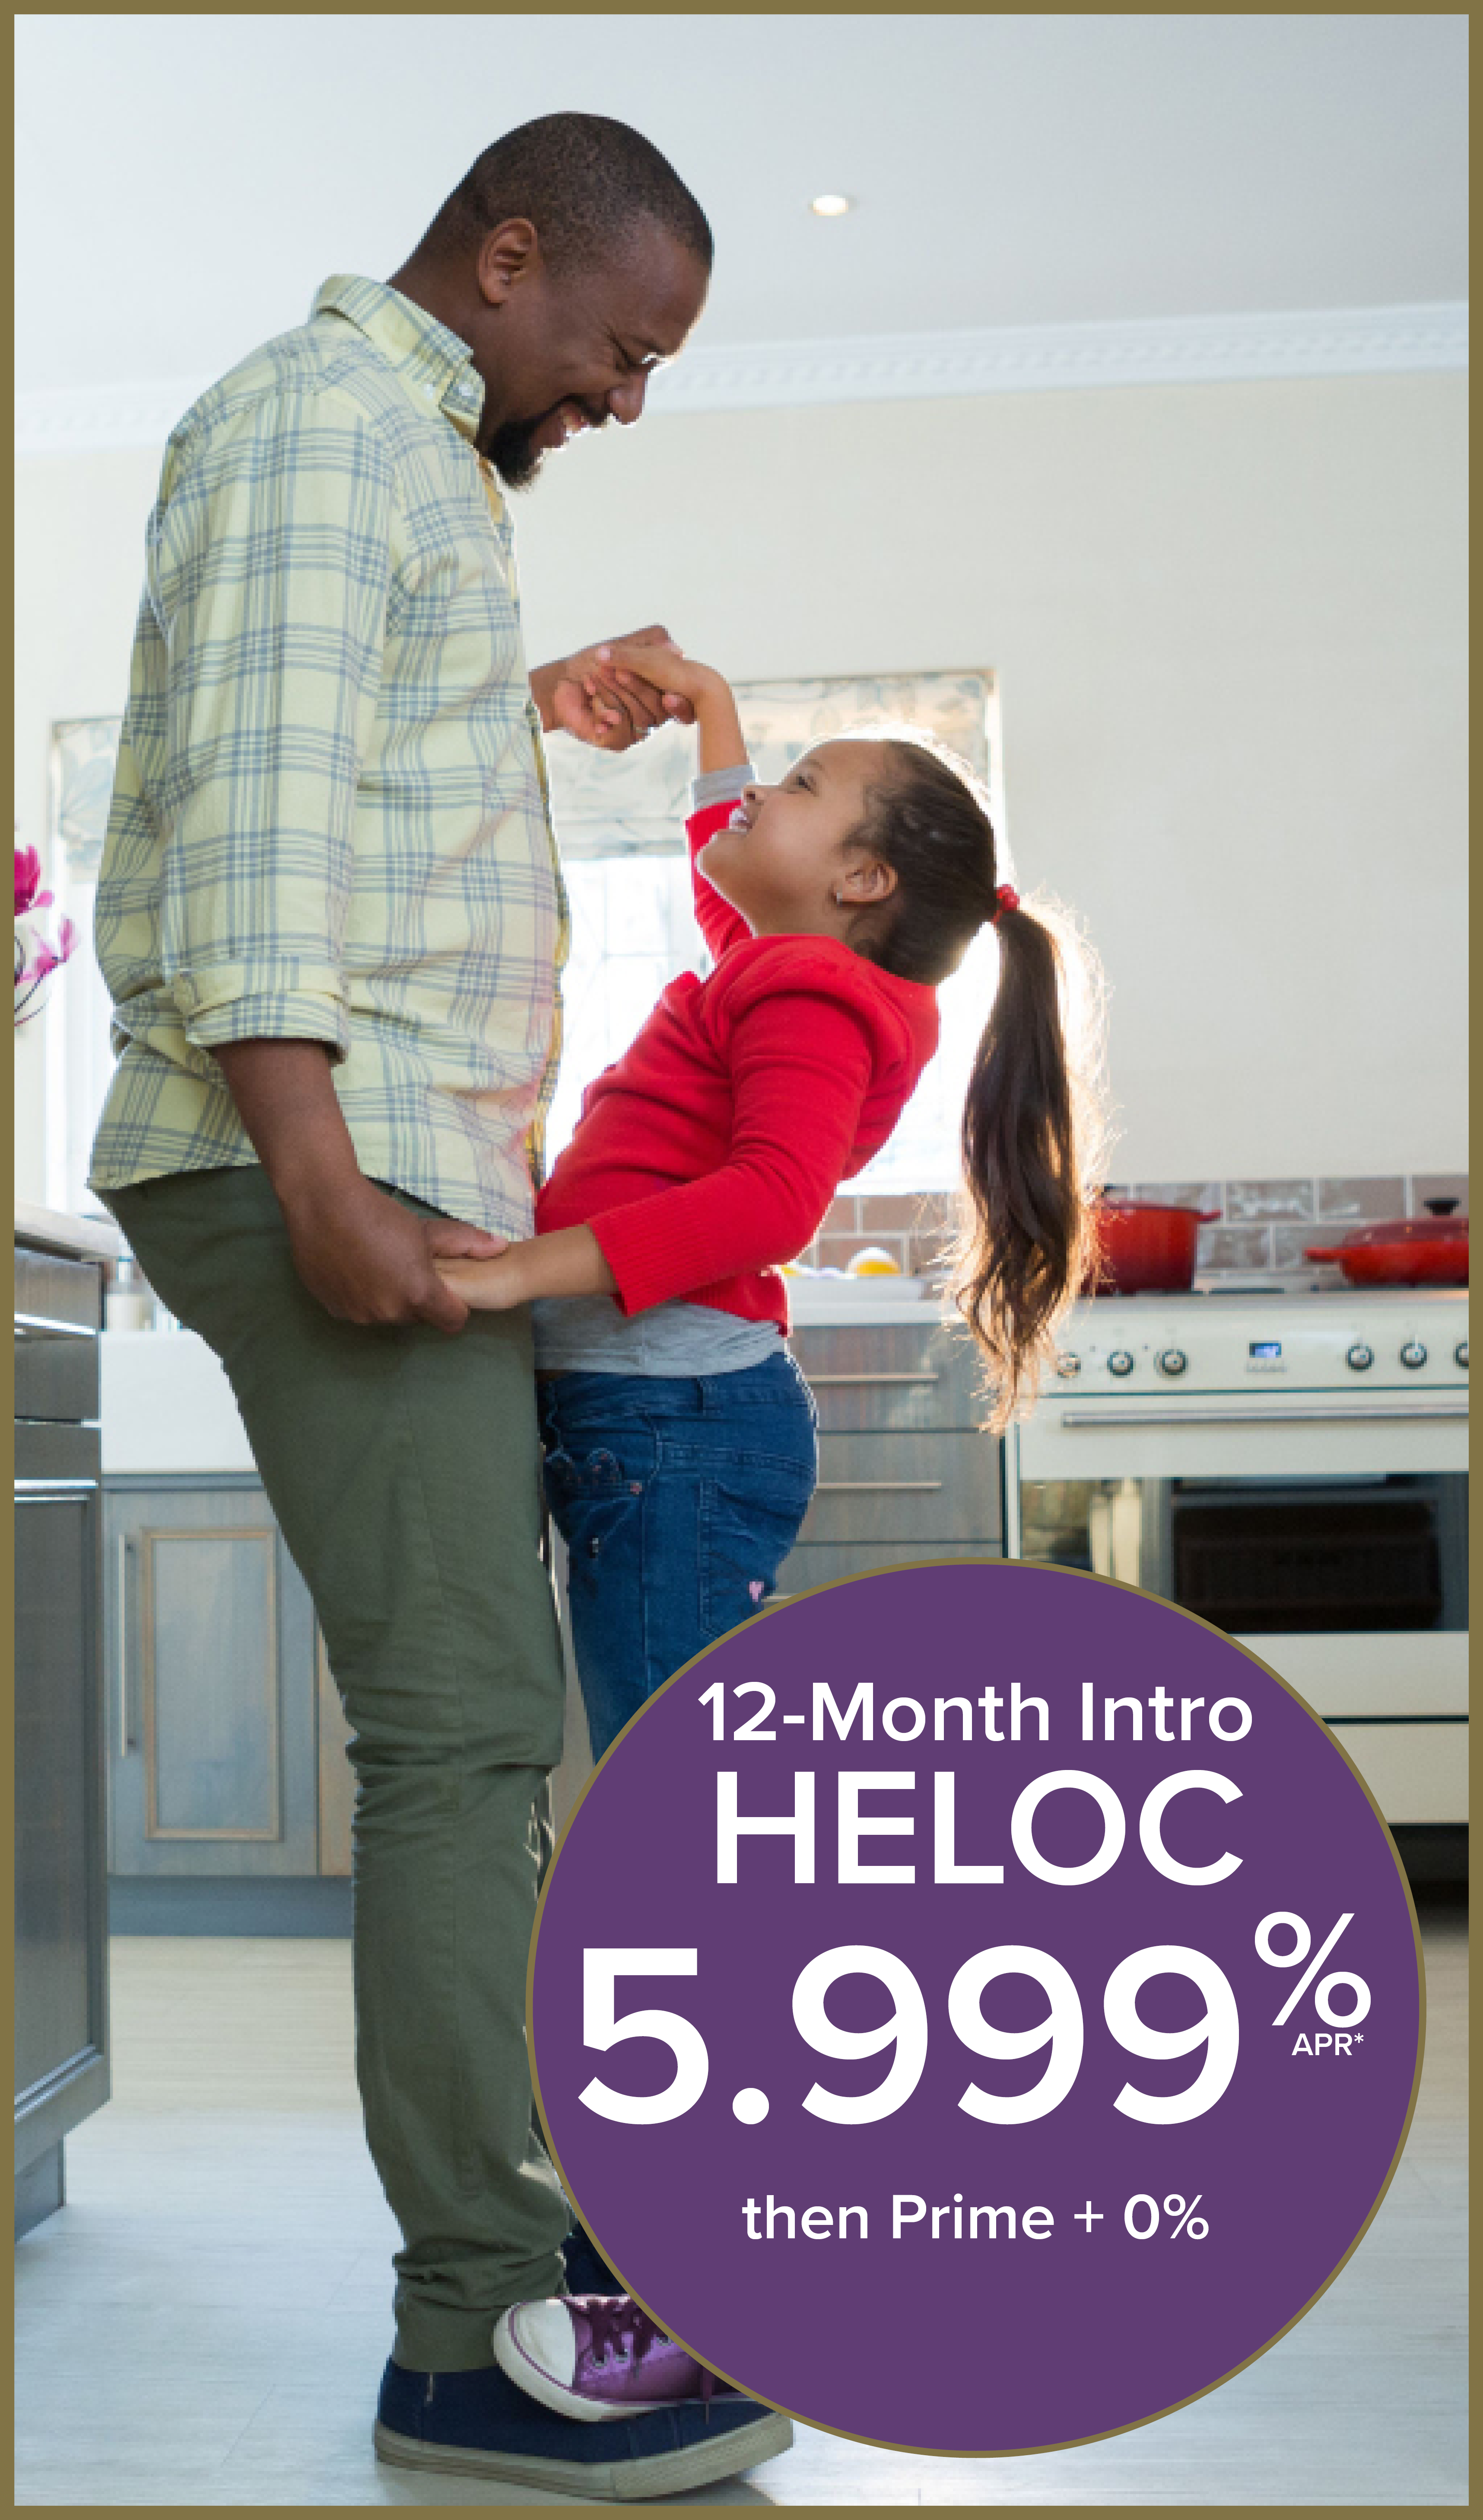 12 month intro heloc 5.999% apr then prime plus 0%